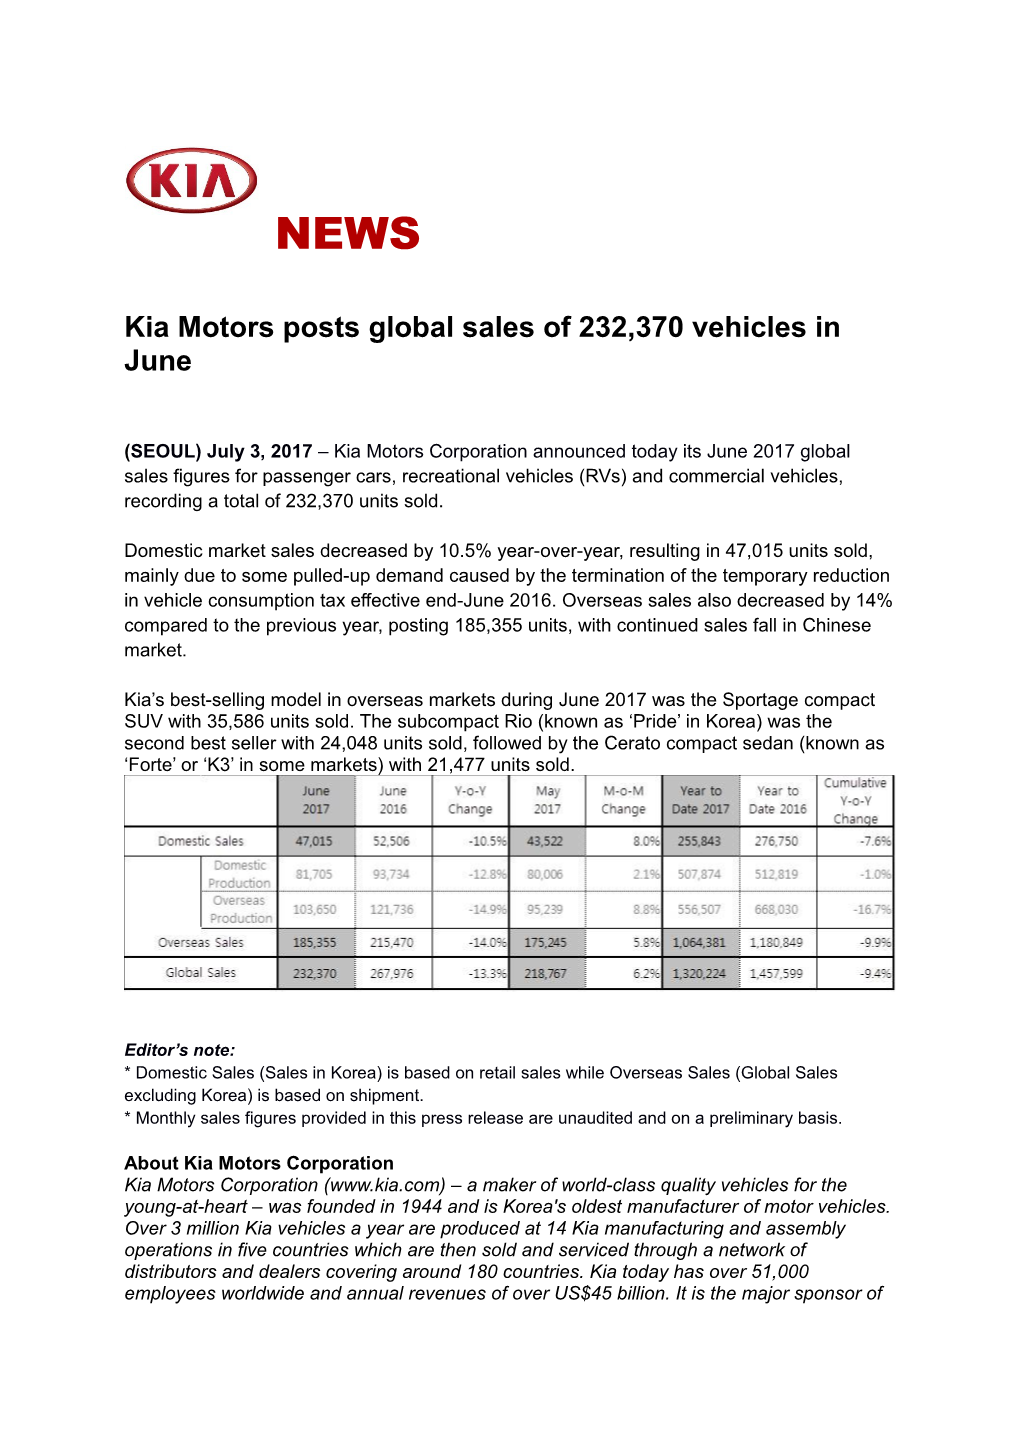 Kia Motors Posts Global Sales of 232,370 Vehicles in June